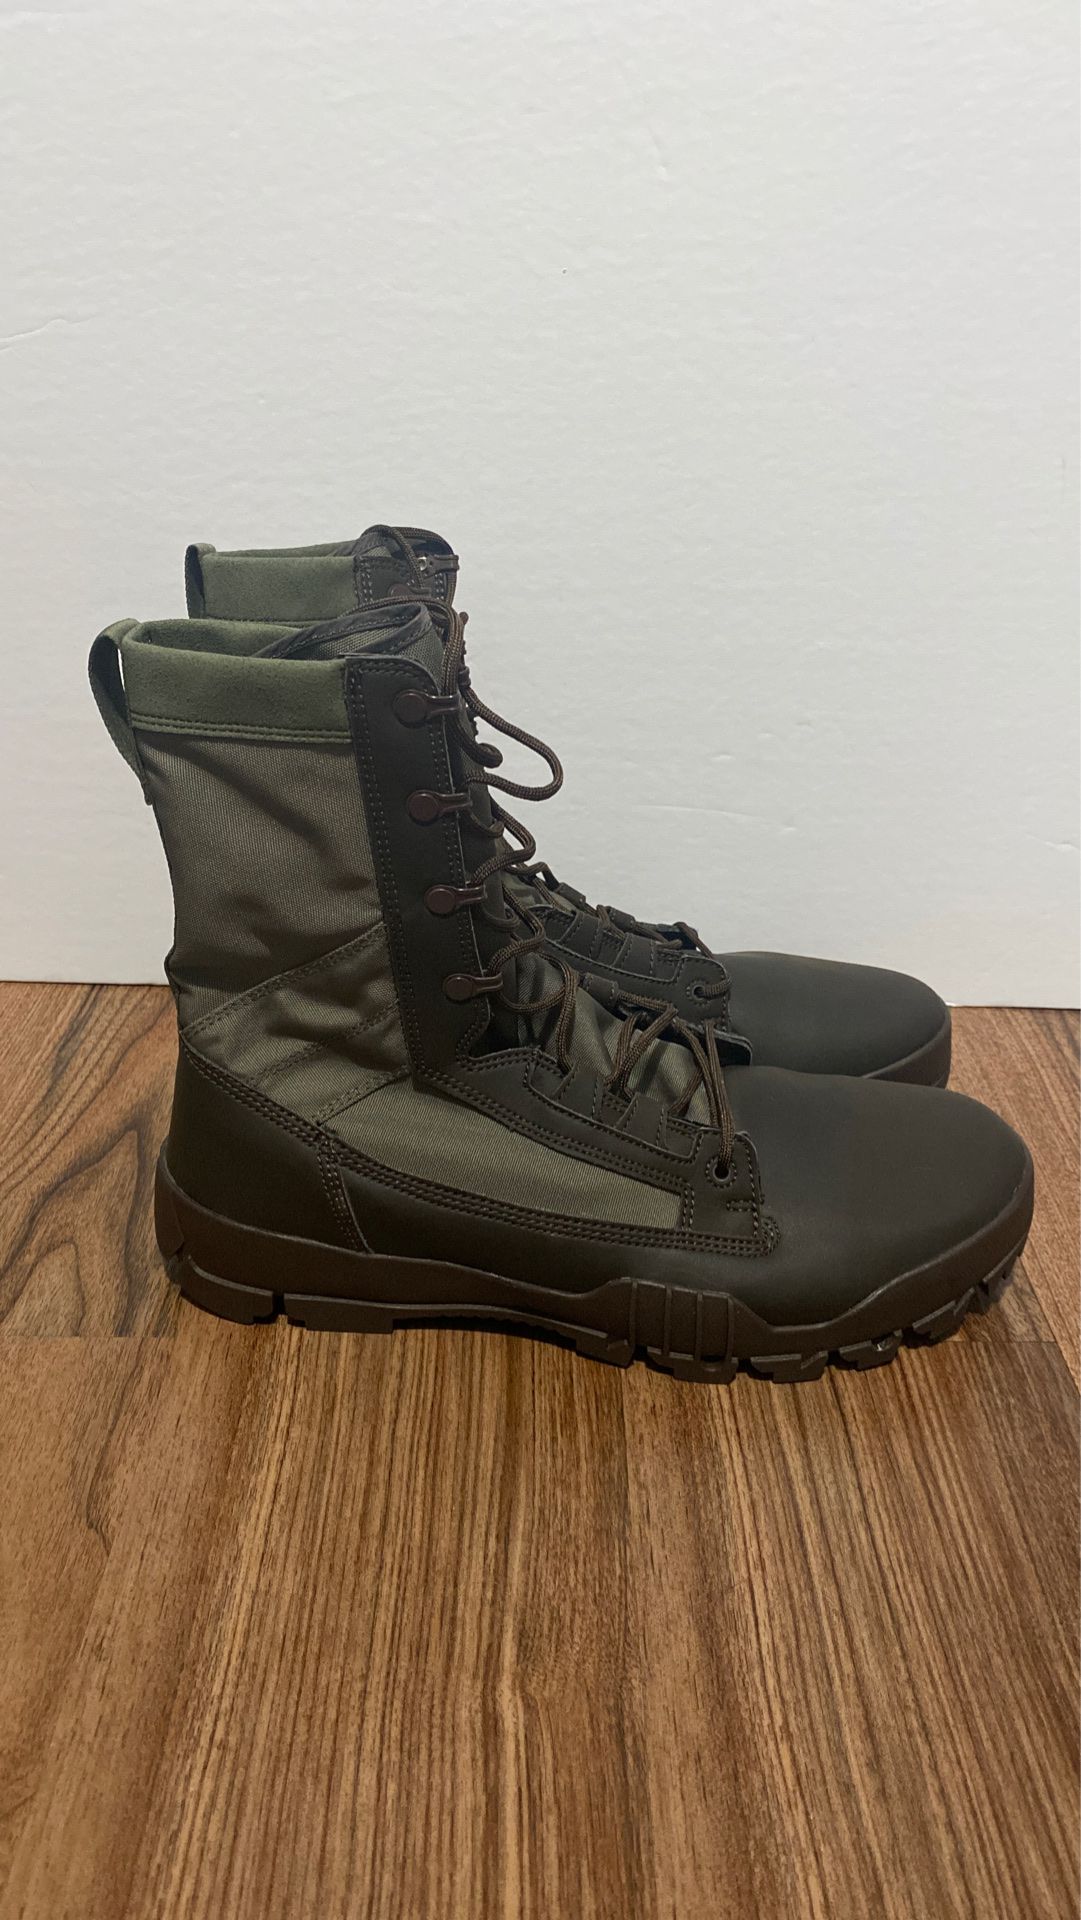 Nike SFB Jungle 8" Field Boots/Military